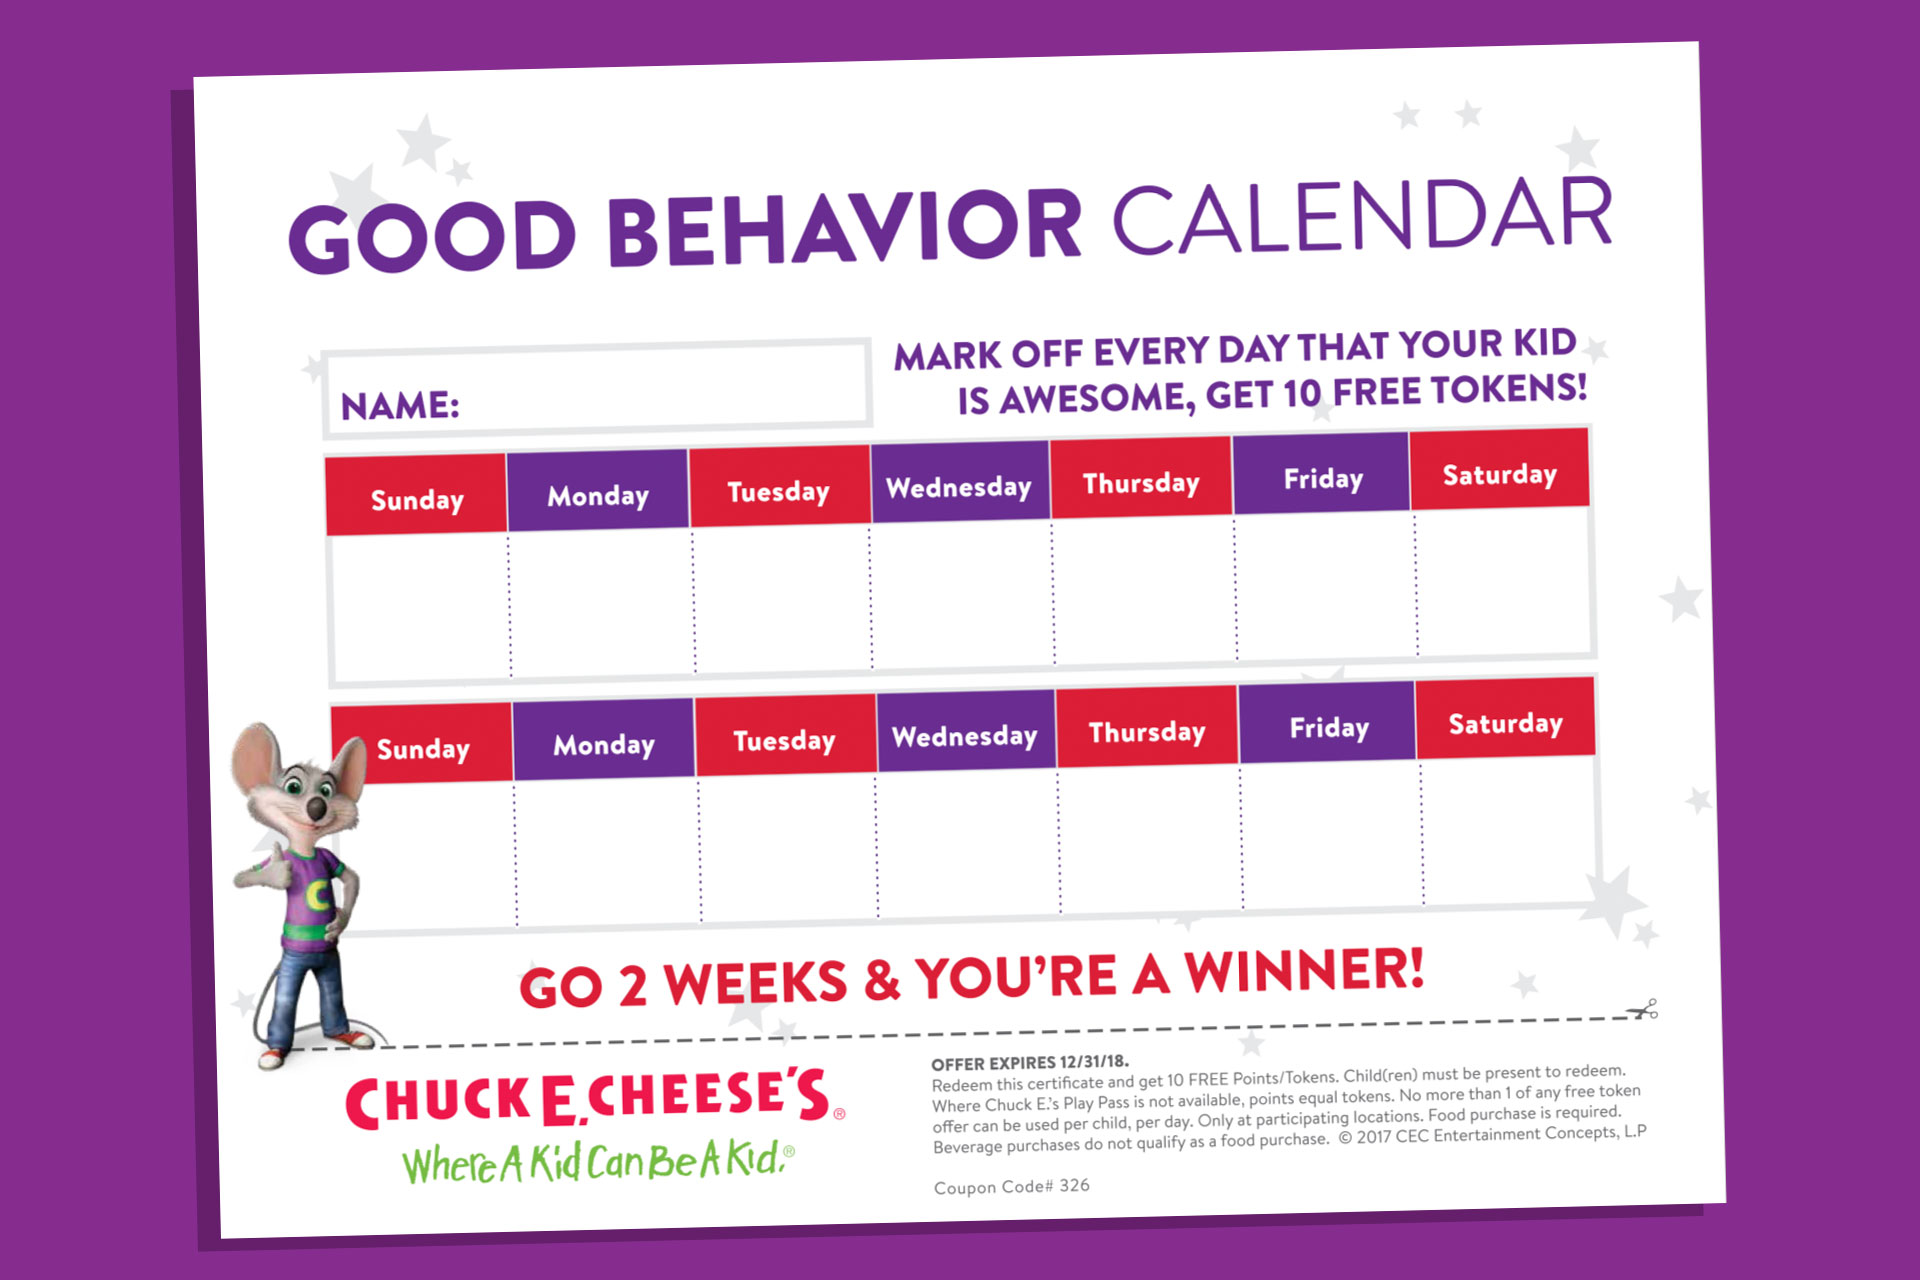 Good behavior calendar